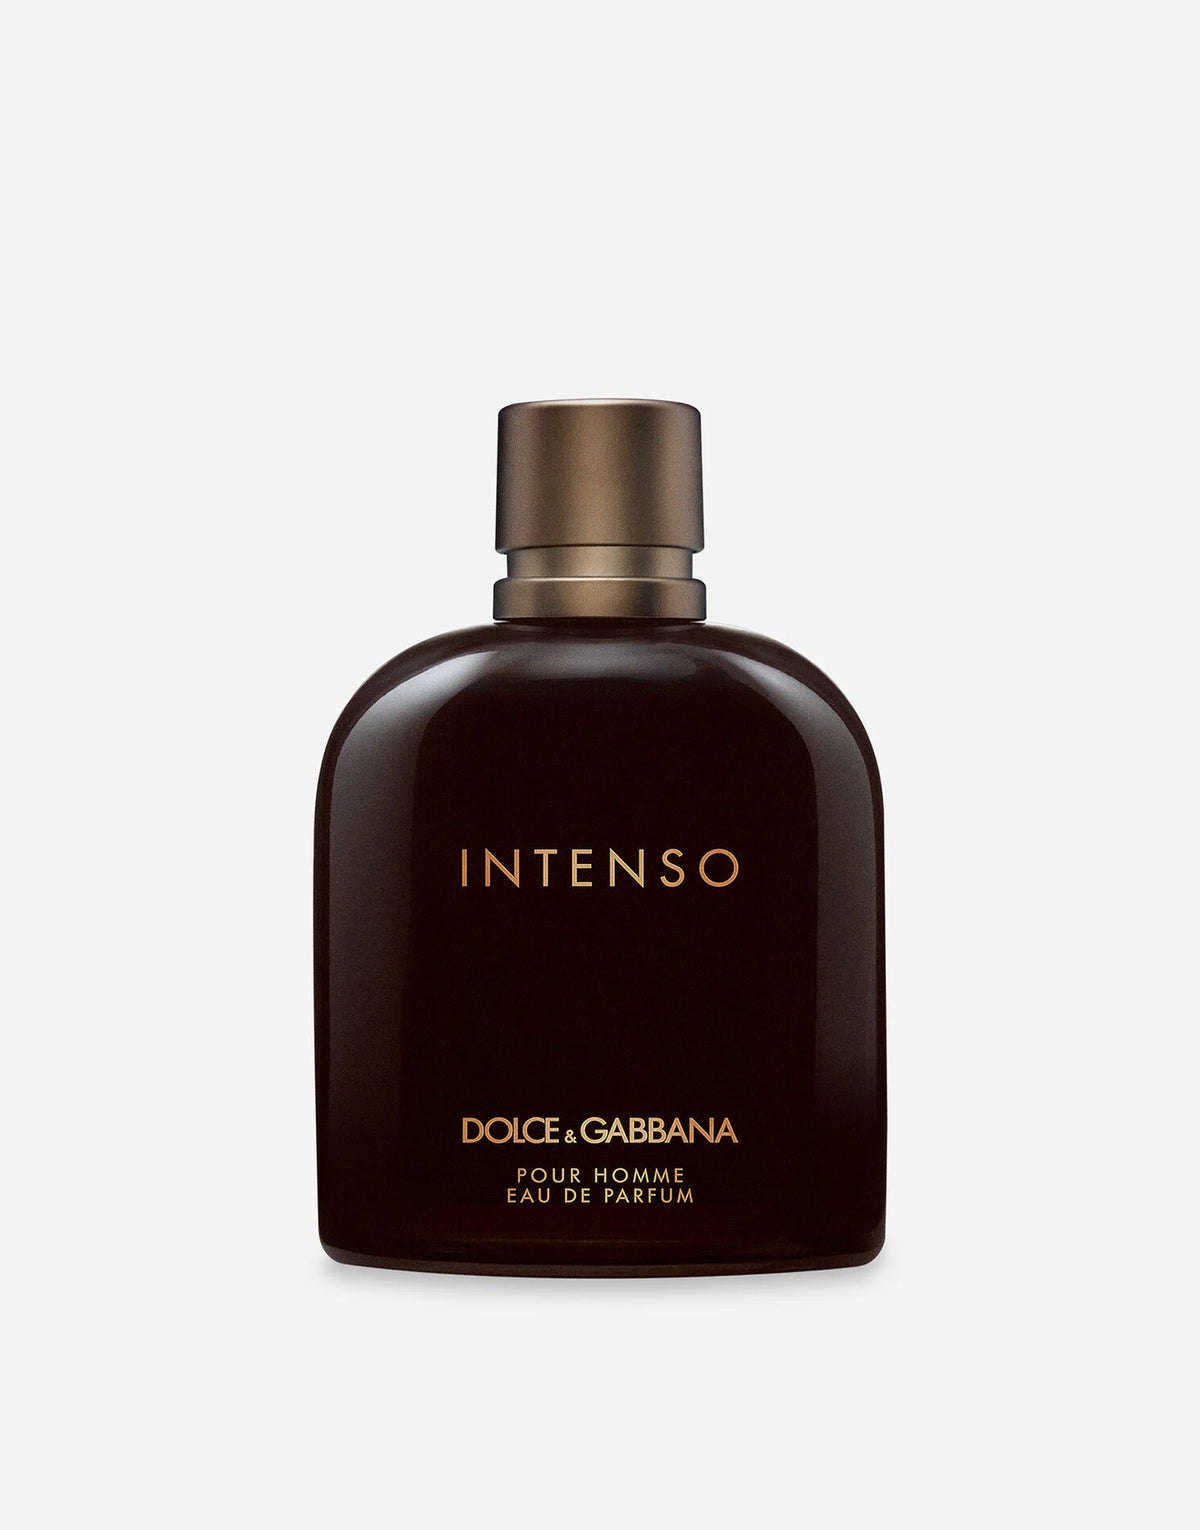 Dolce & Gabbana Intenso For Men - Eau de Parfum - 125ml